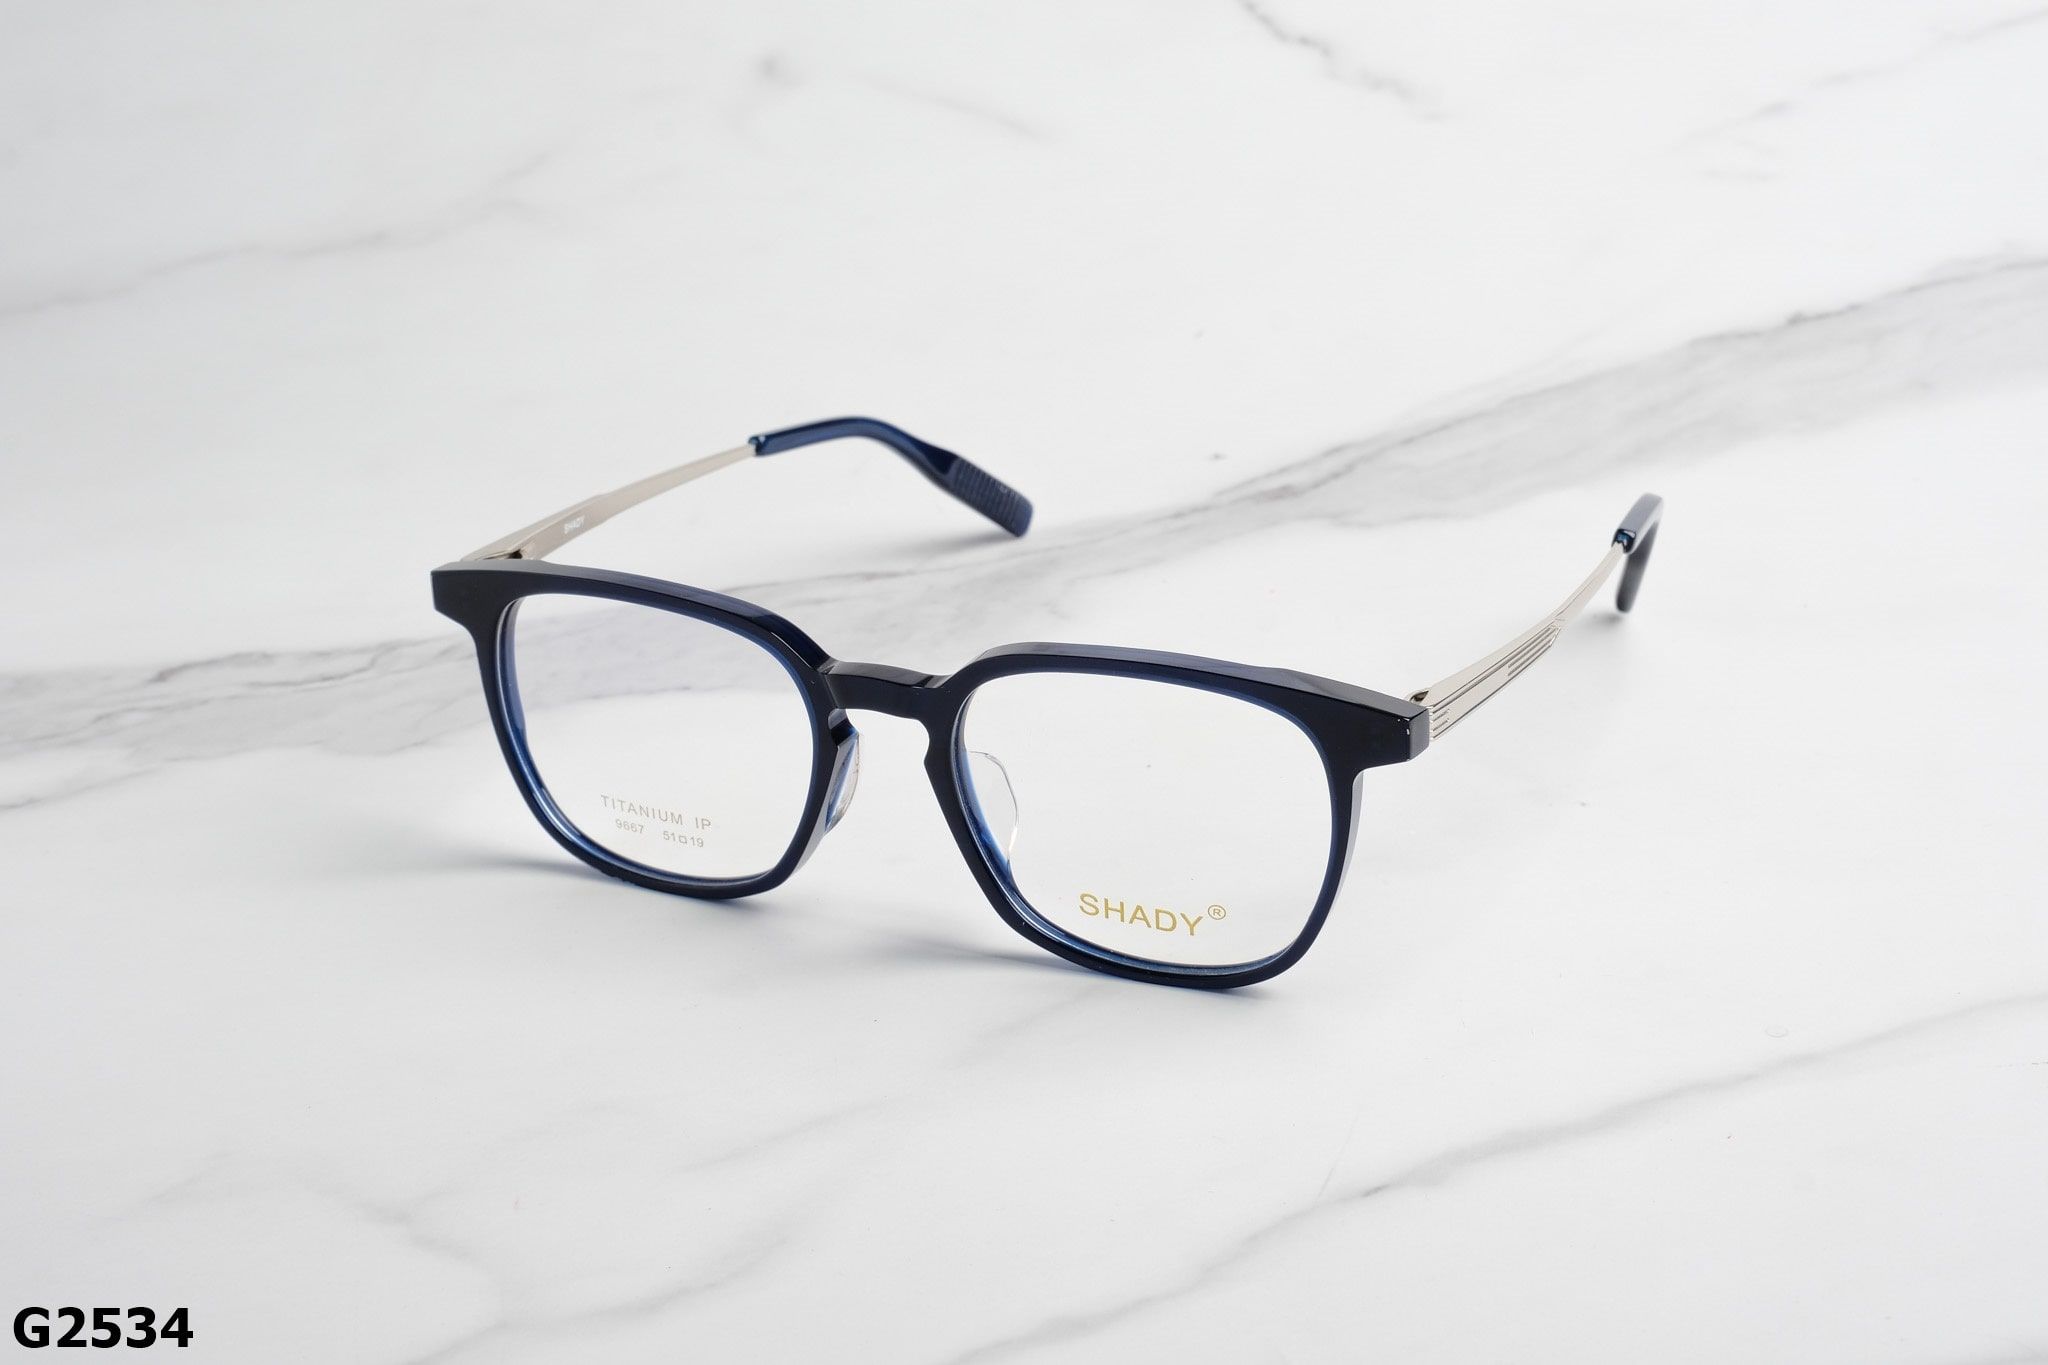  SHADY Eyewear - Glasses - G2534 